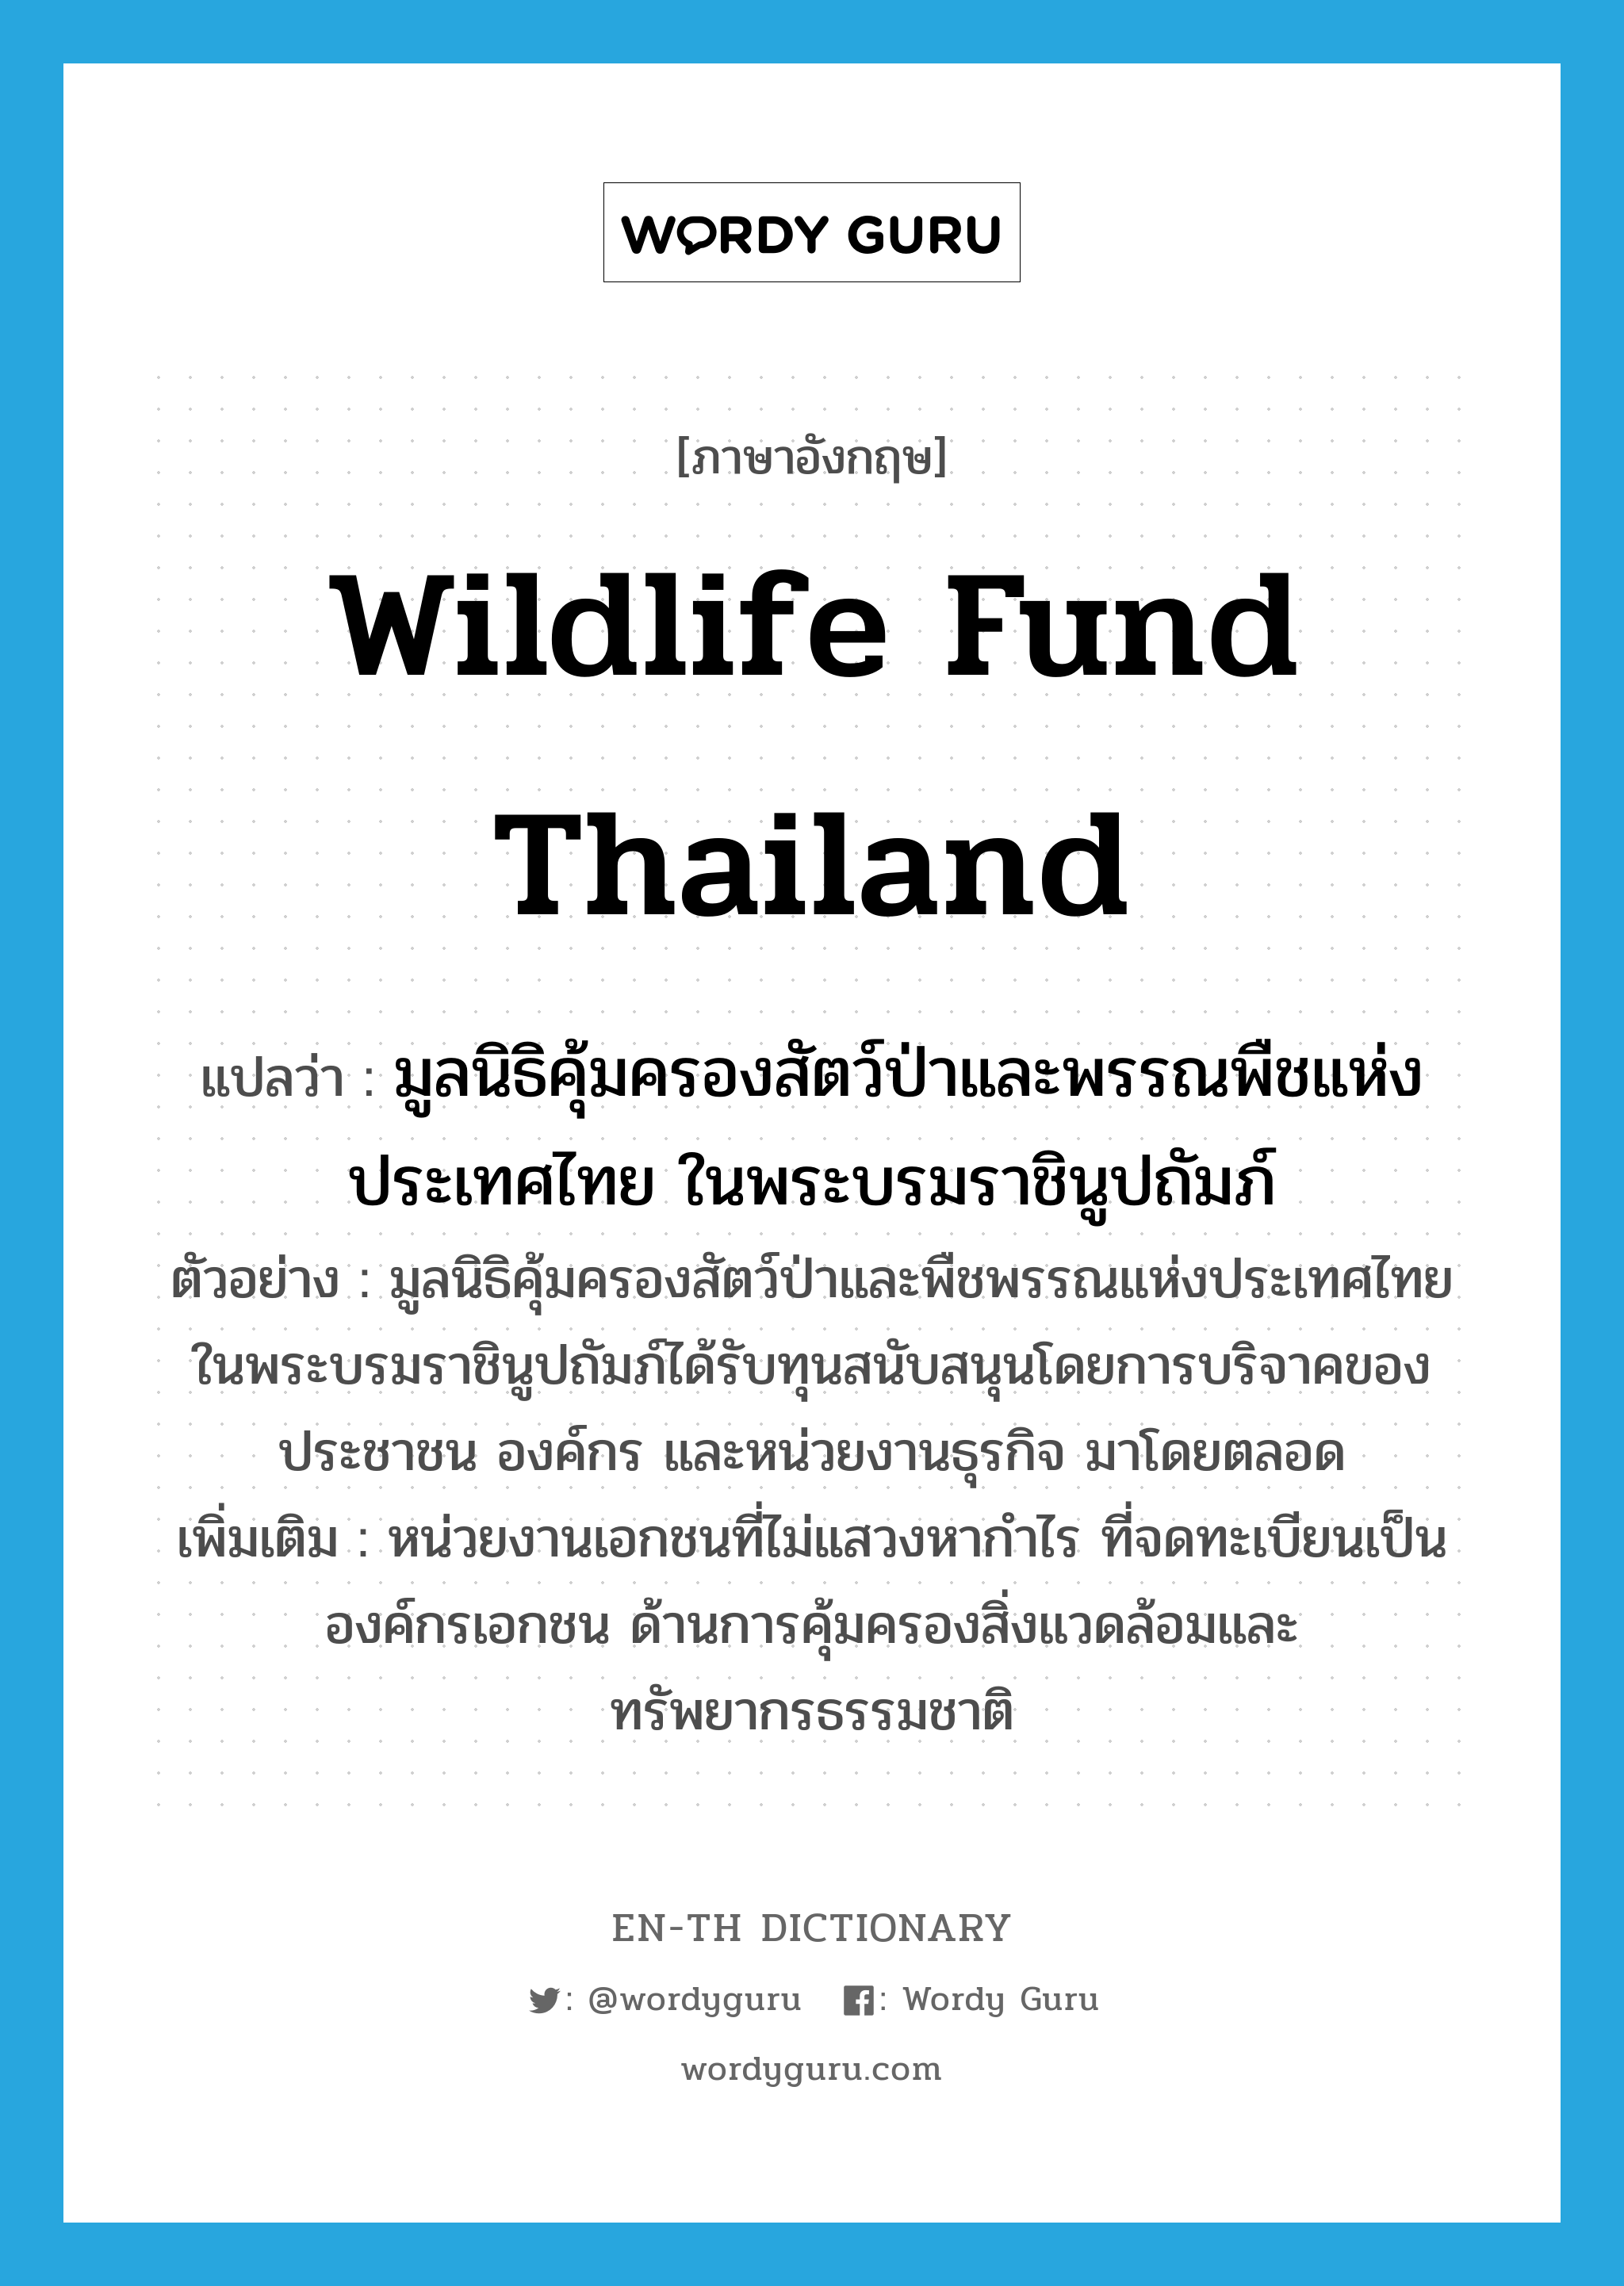 Wildlife fund Thailand แปลว่า?, คำศัพท์ภาษาอังกฤษ Wildlife fund Thailand แปลว่า มูลนิธิคุ้มครองสัตว์ป่าและพรรณพืชแห่งประเทศไทย ในพระบรมราชินูปถัมภ์ ประเภท N ตัวอย่าง มูลนิธิคุ้มครองสัตว์ป่าและพืชพรรณแห่งประเทศไทย ในพระบรมราชินูปถัมภ์ได้รับทุนสนับสนุนโดยการบริจาคของประชาชน องค์กร และหน่วยงานธุรกิจ มาโดยตลอด เพิ่มเติม หน่วยงานเอกชนที่ไม่แสวงหากำไร ที่จดทะเบียนเป็นองค์กรเอกชน ด้านการคุ้มครองสิ่งแวดล้อมและทรัพยากรธรรมชาติ หมวด N